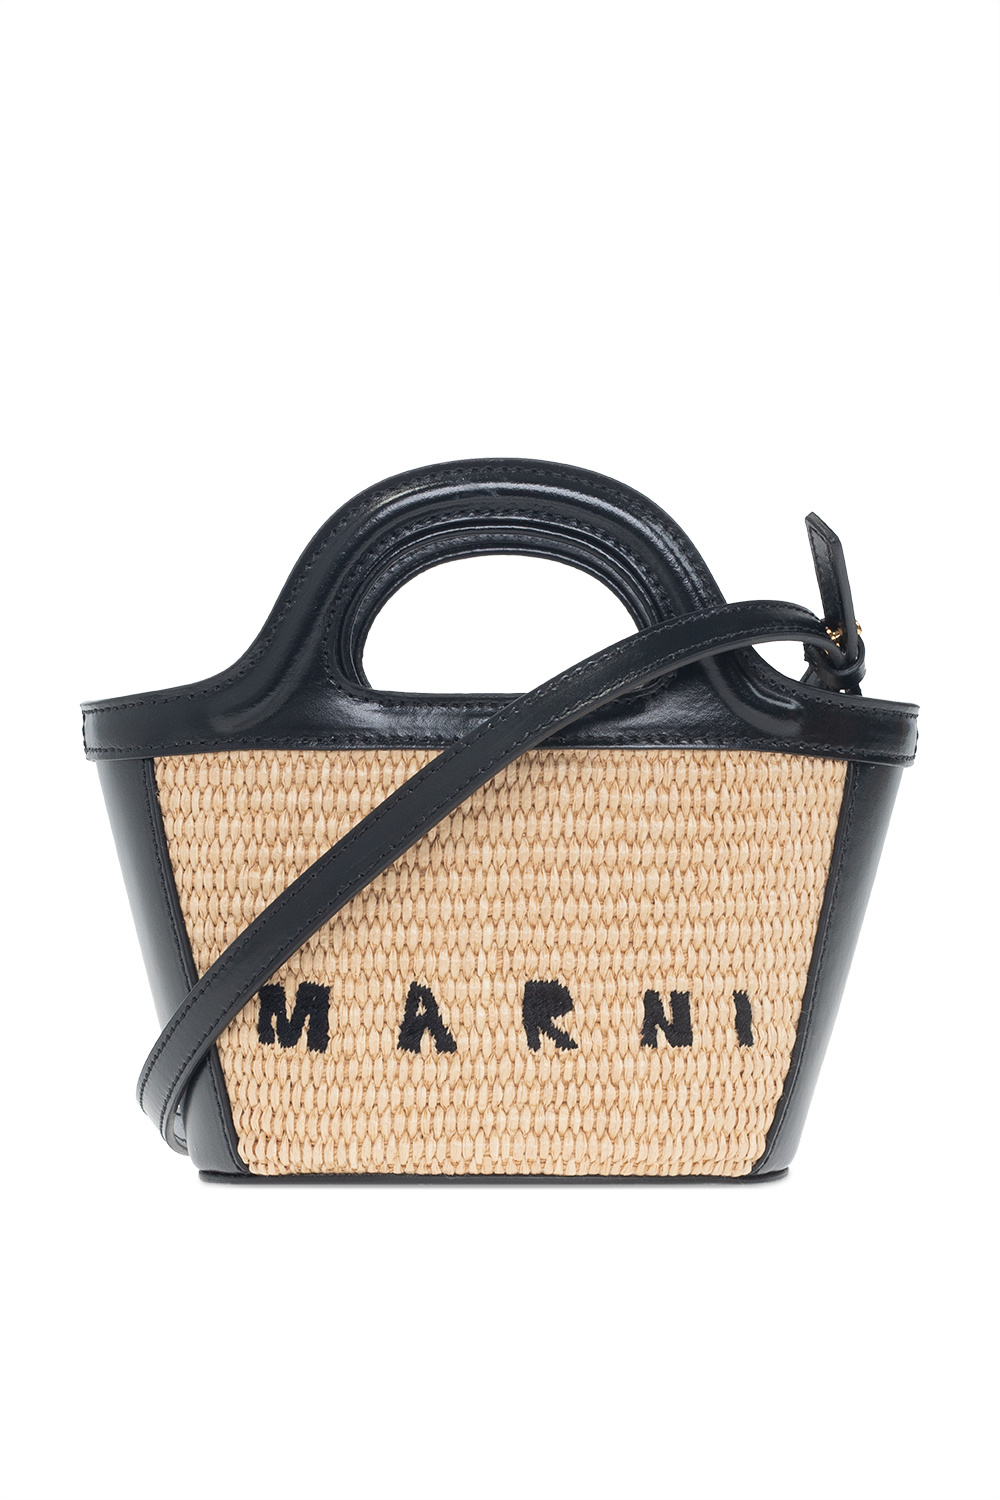 Marni, Bags, Marni Tropicalia Micro Bag In Brown Leather And Raffia